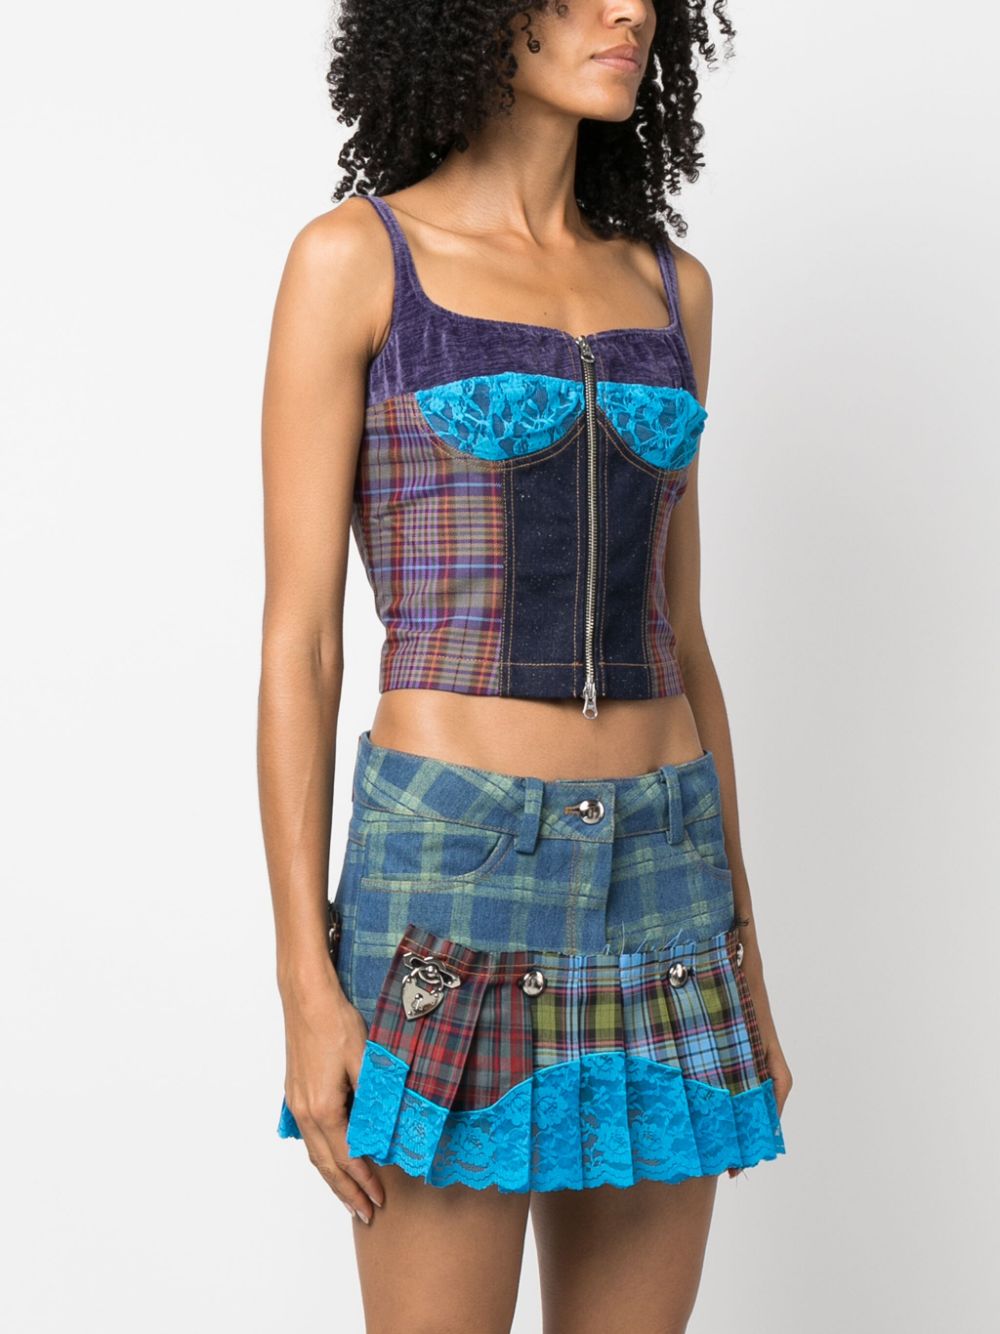 Top con zip tartan in multicolore - donna ANDERSSON BELL | ATB995WPRPL